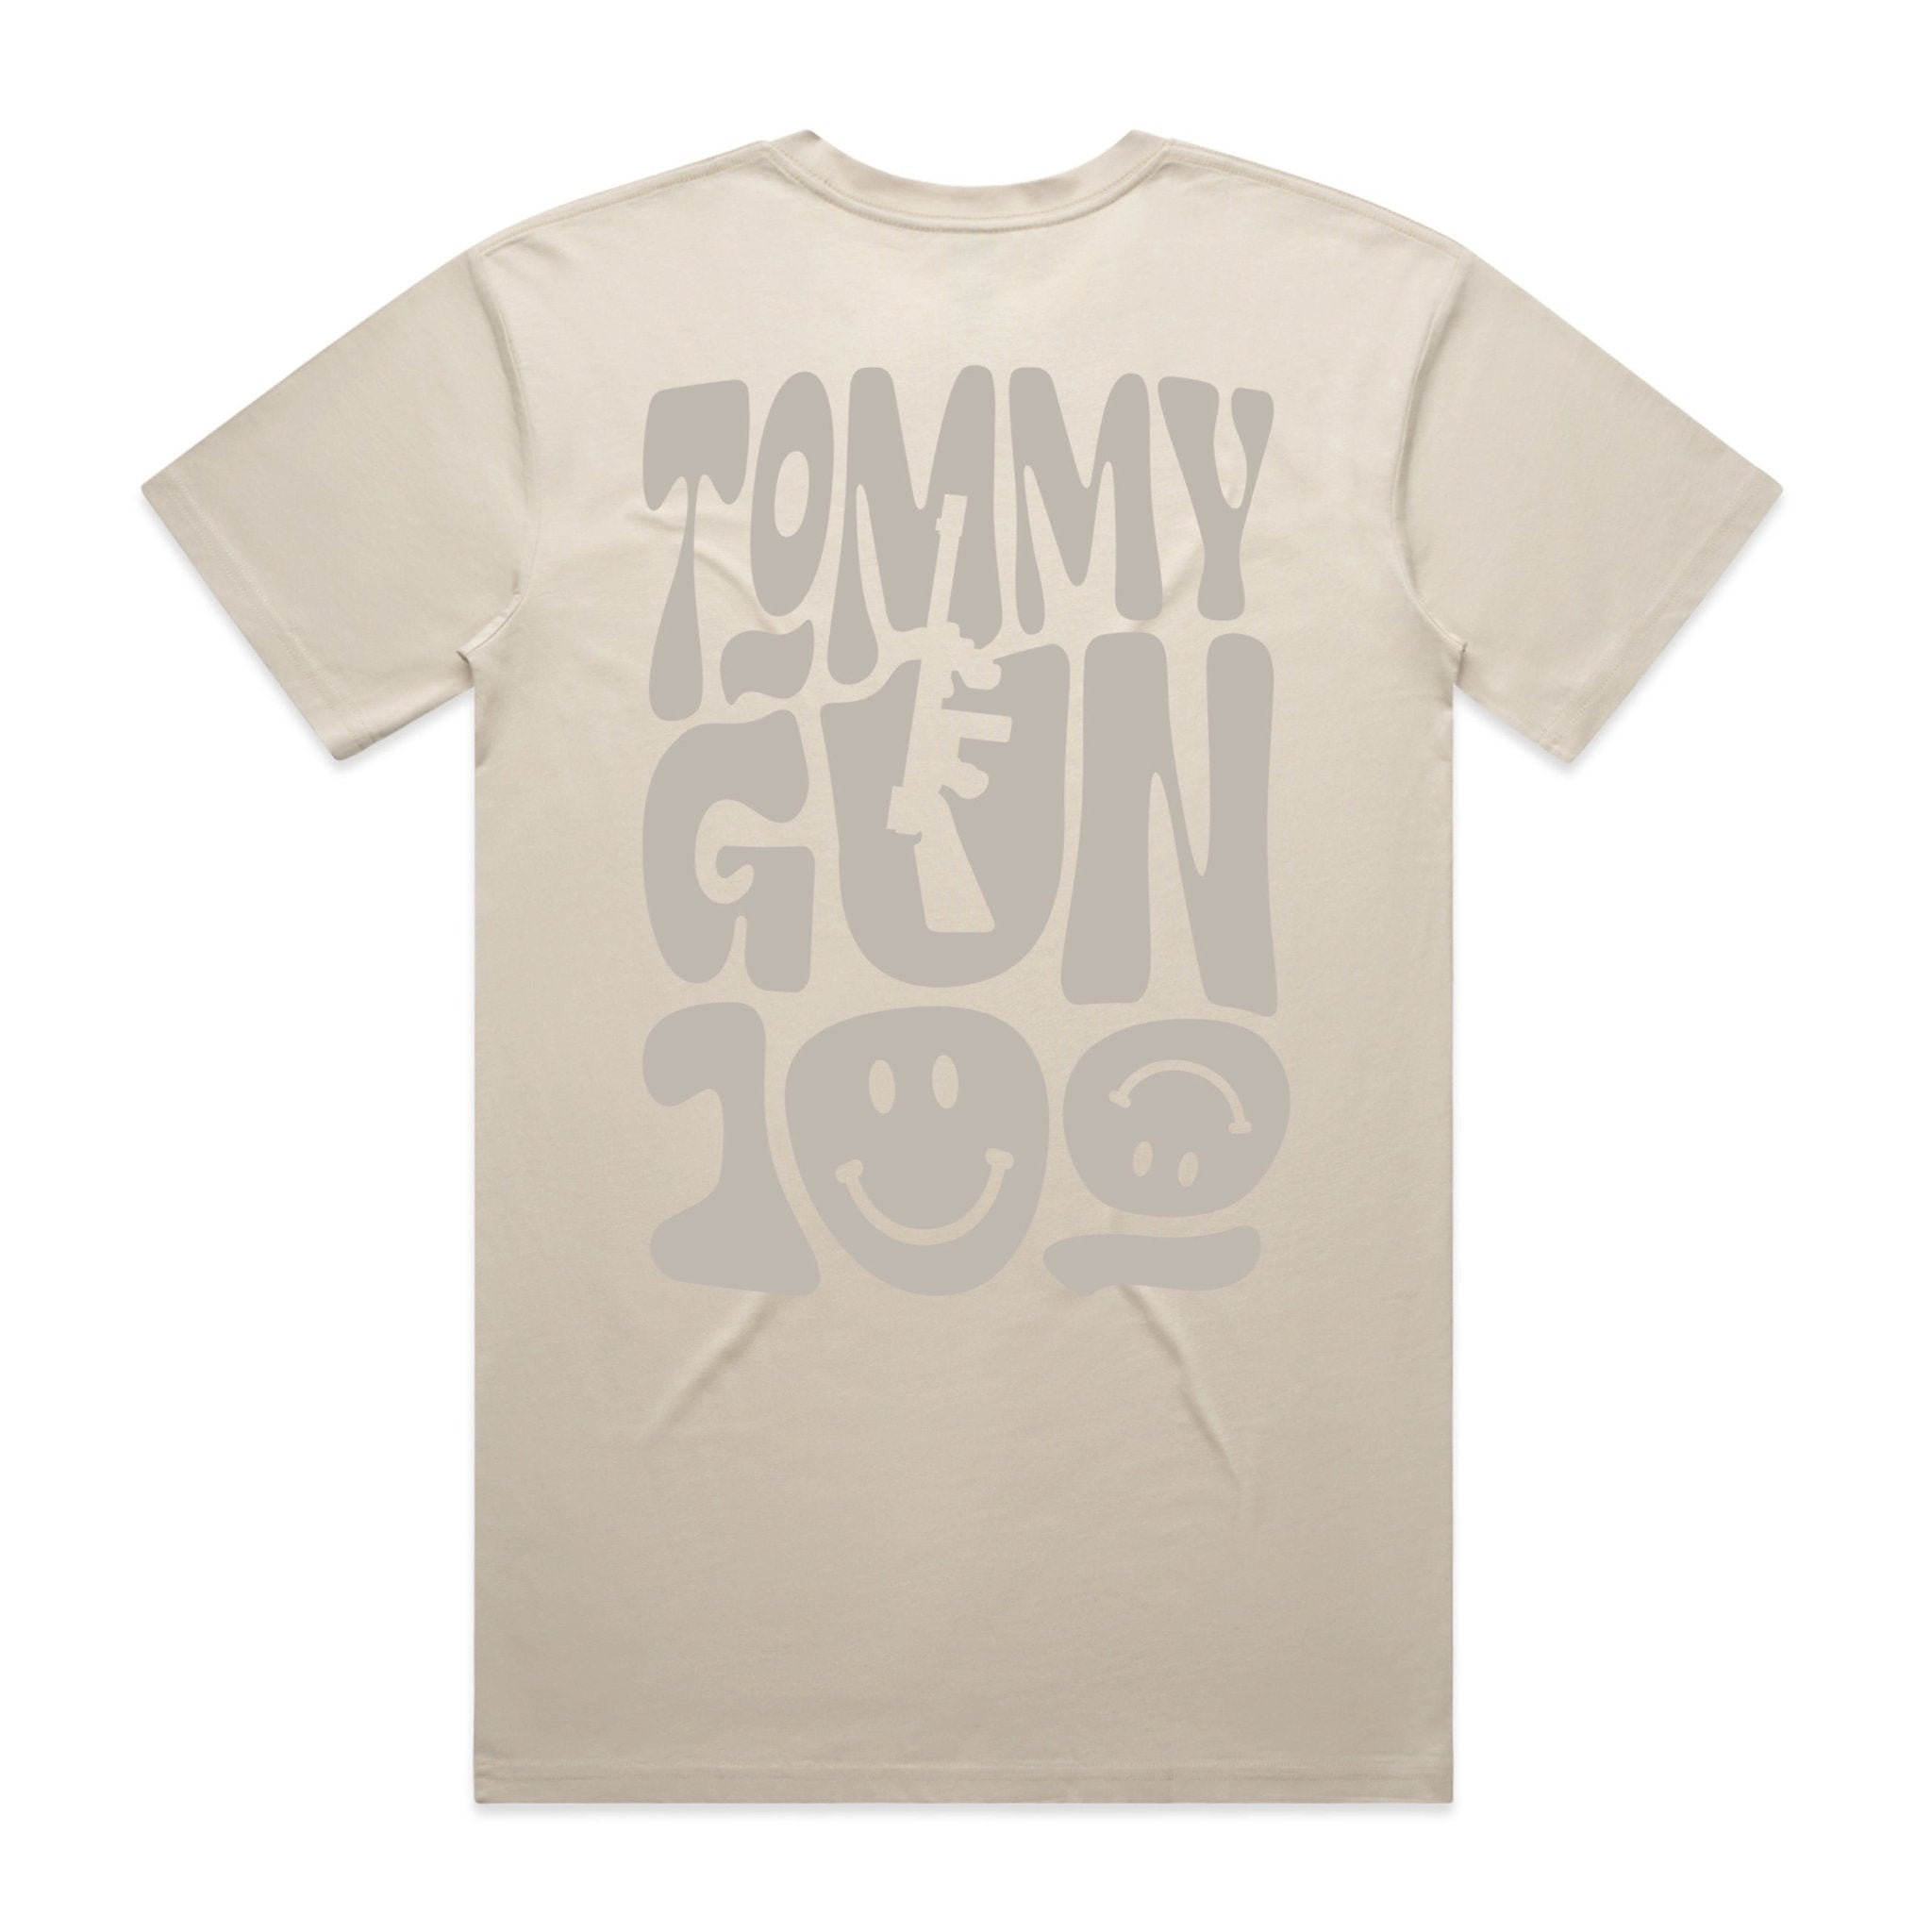 Tommy Gun Tee - Kecks